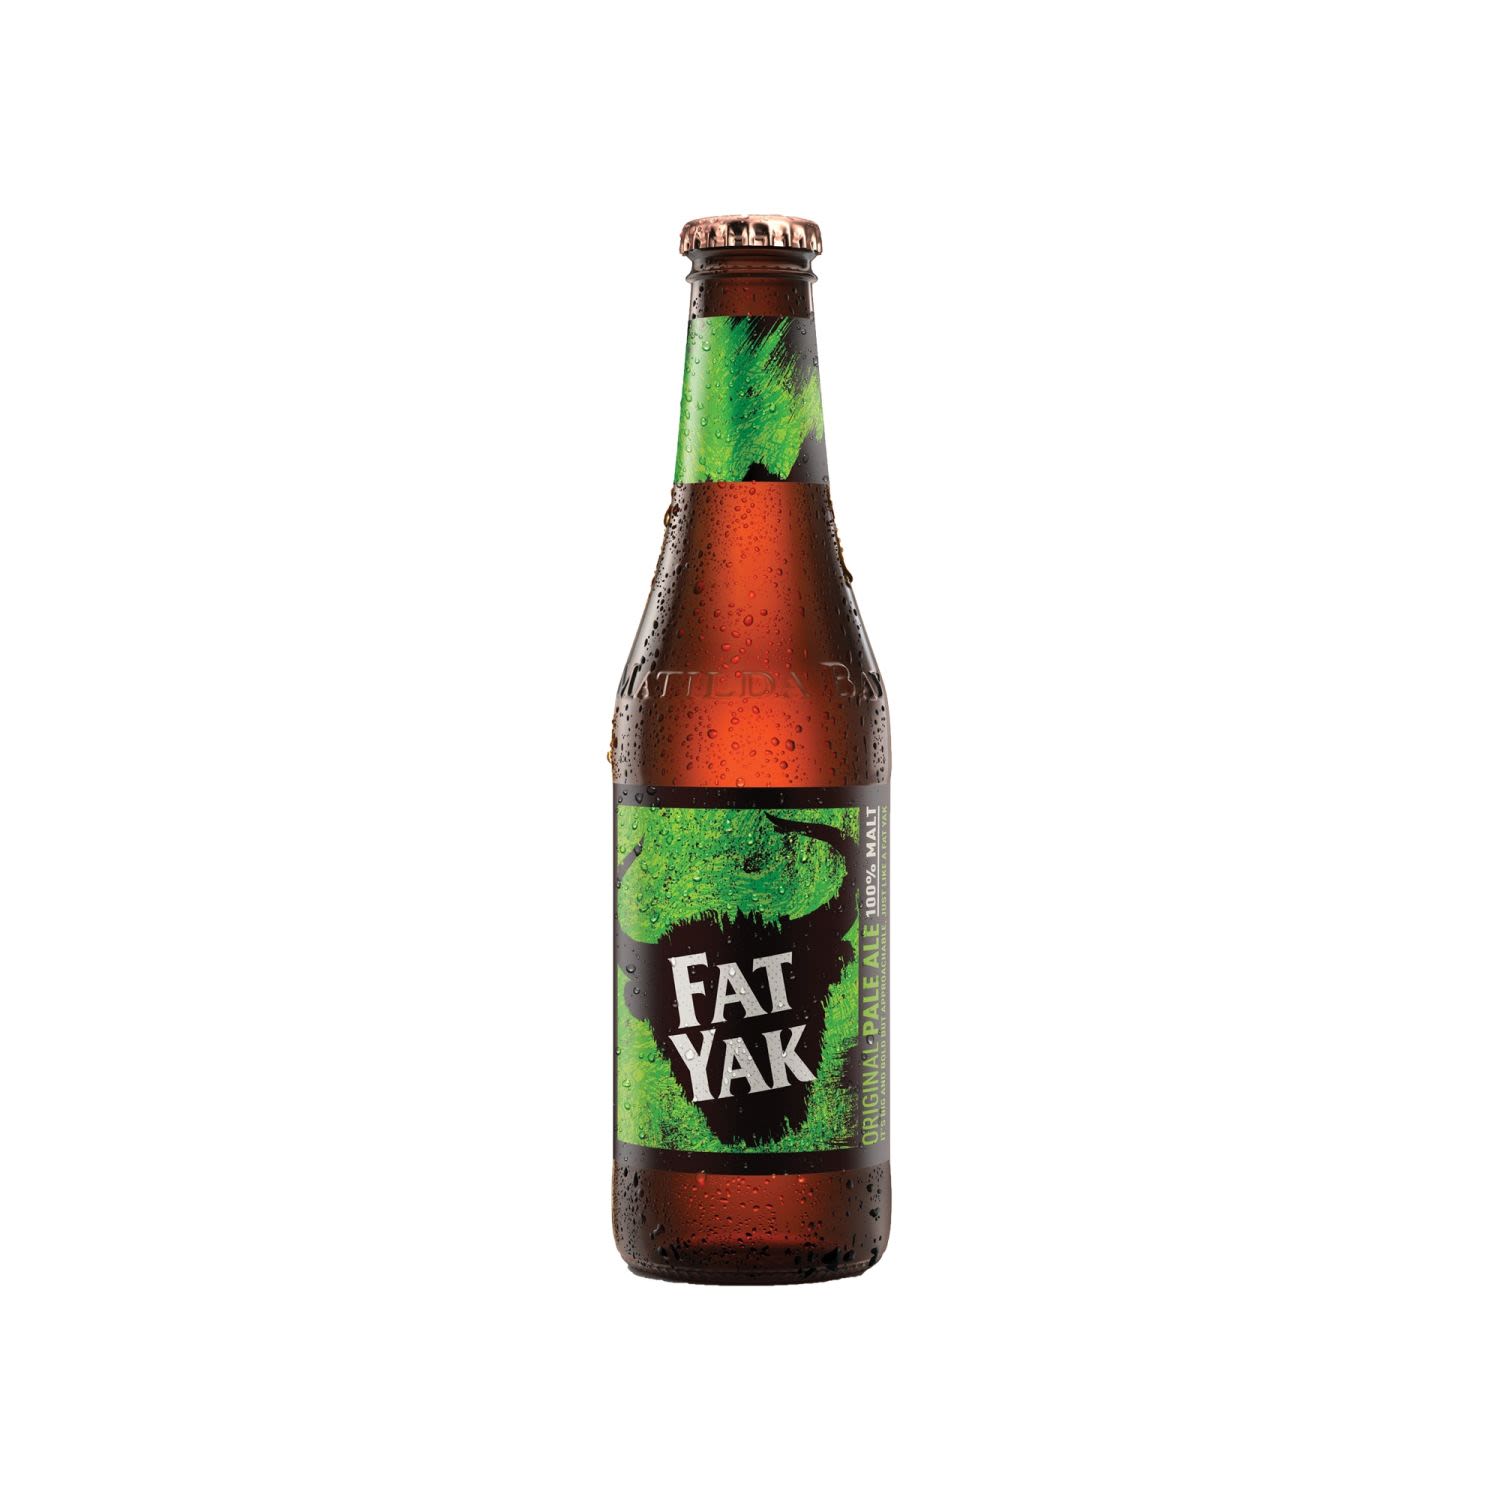 Yak Ales Fat Yak Original Pale Ale Bottle 345mL